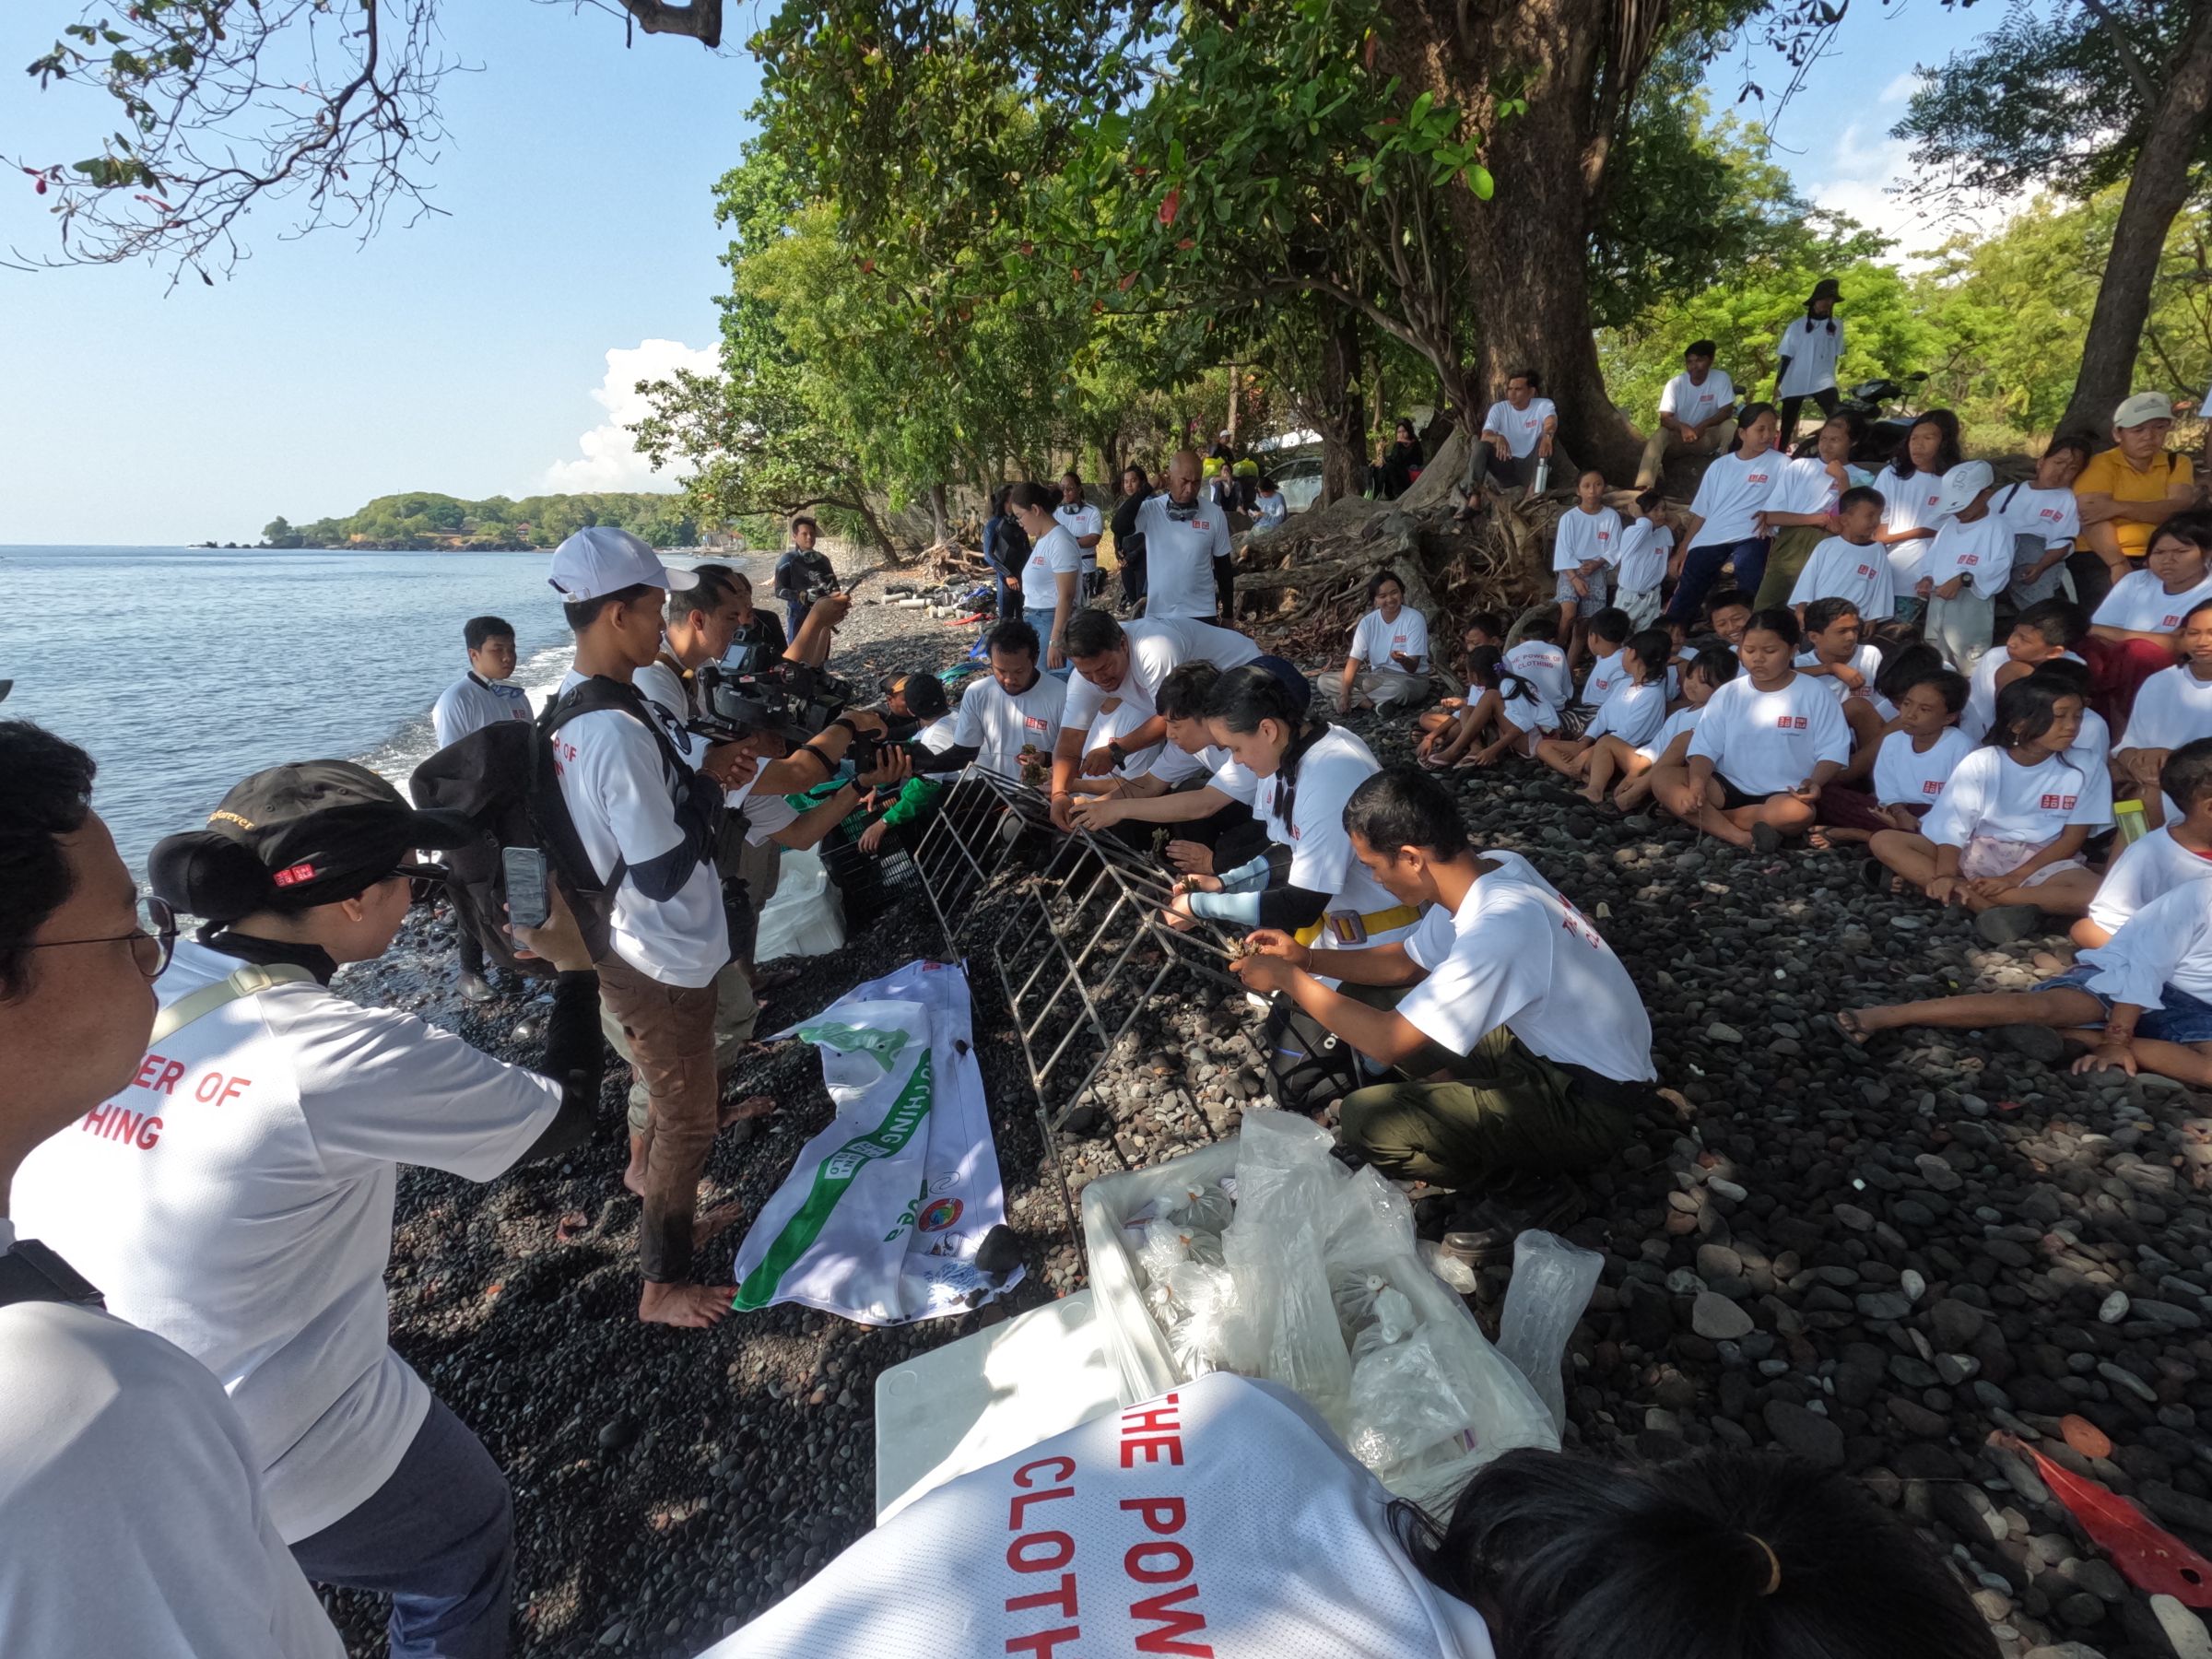  Coral transplantation event and education on single use plastics in Tulamben, Bali.